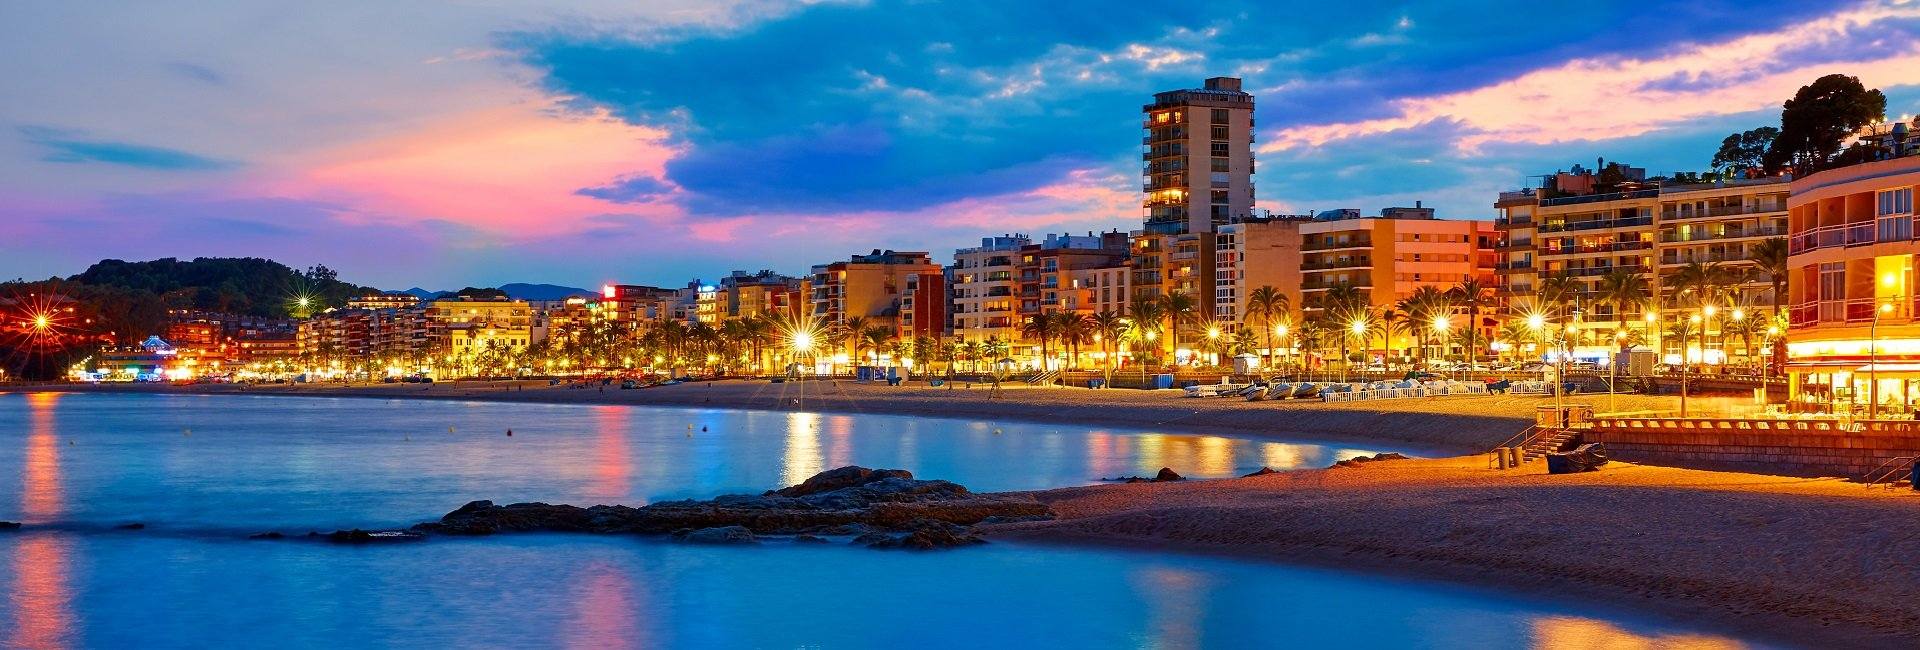 Costa Brava, Spania